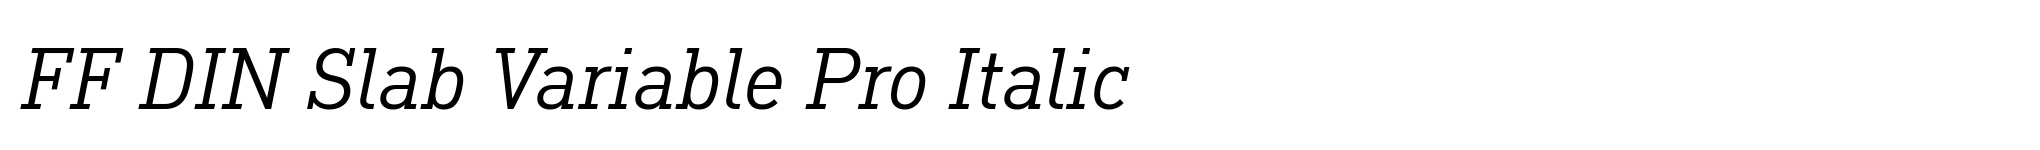 FF DIN Slab Variable Pro Italic image